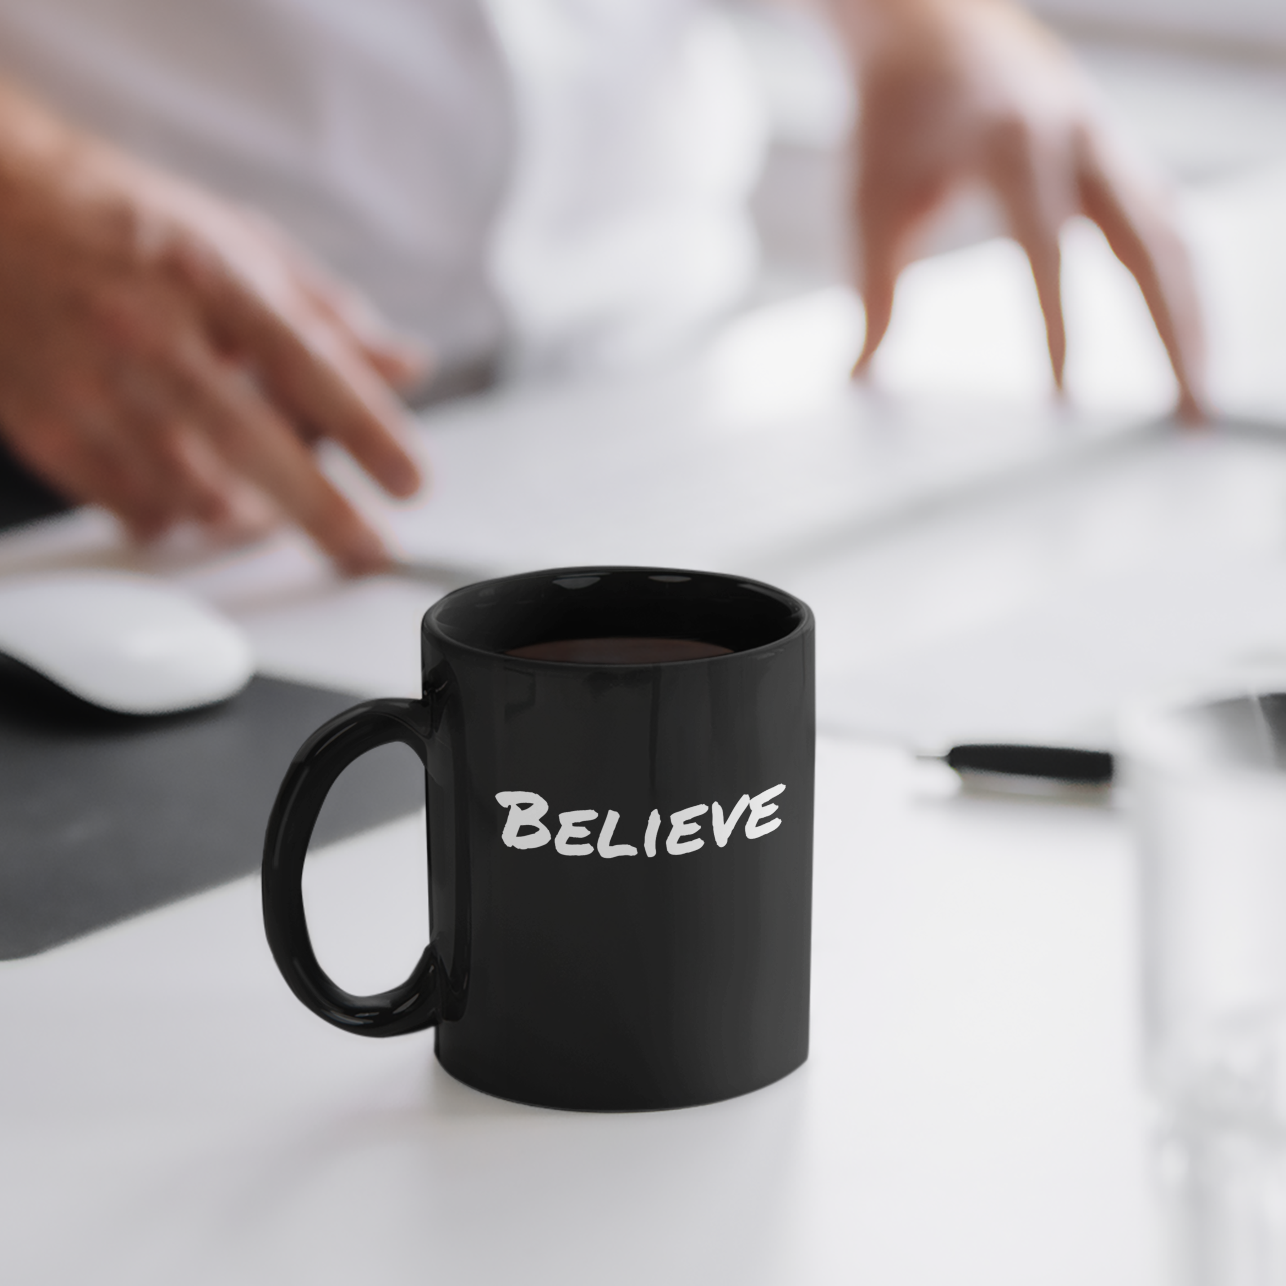 Word Believe on positive affirmations Motivational Mugs